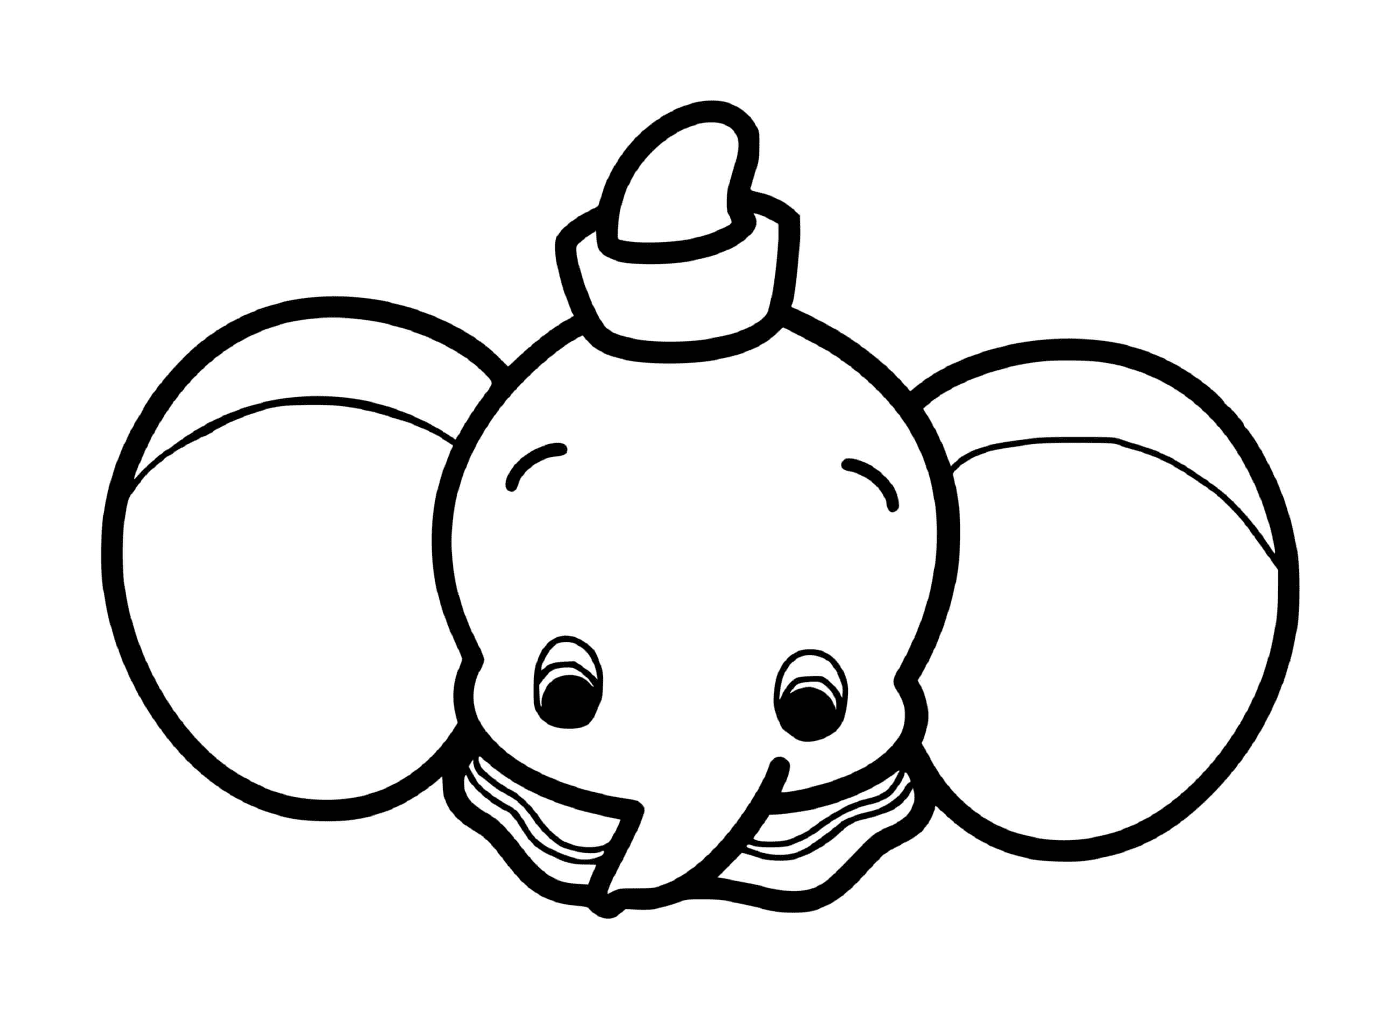  Dumbo baby kawaiiCity name (optional, probably does not need a translation) 